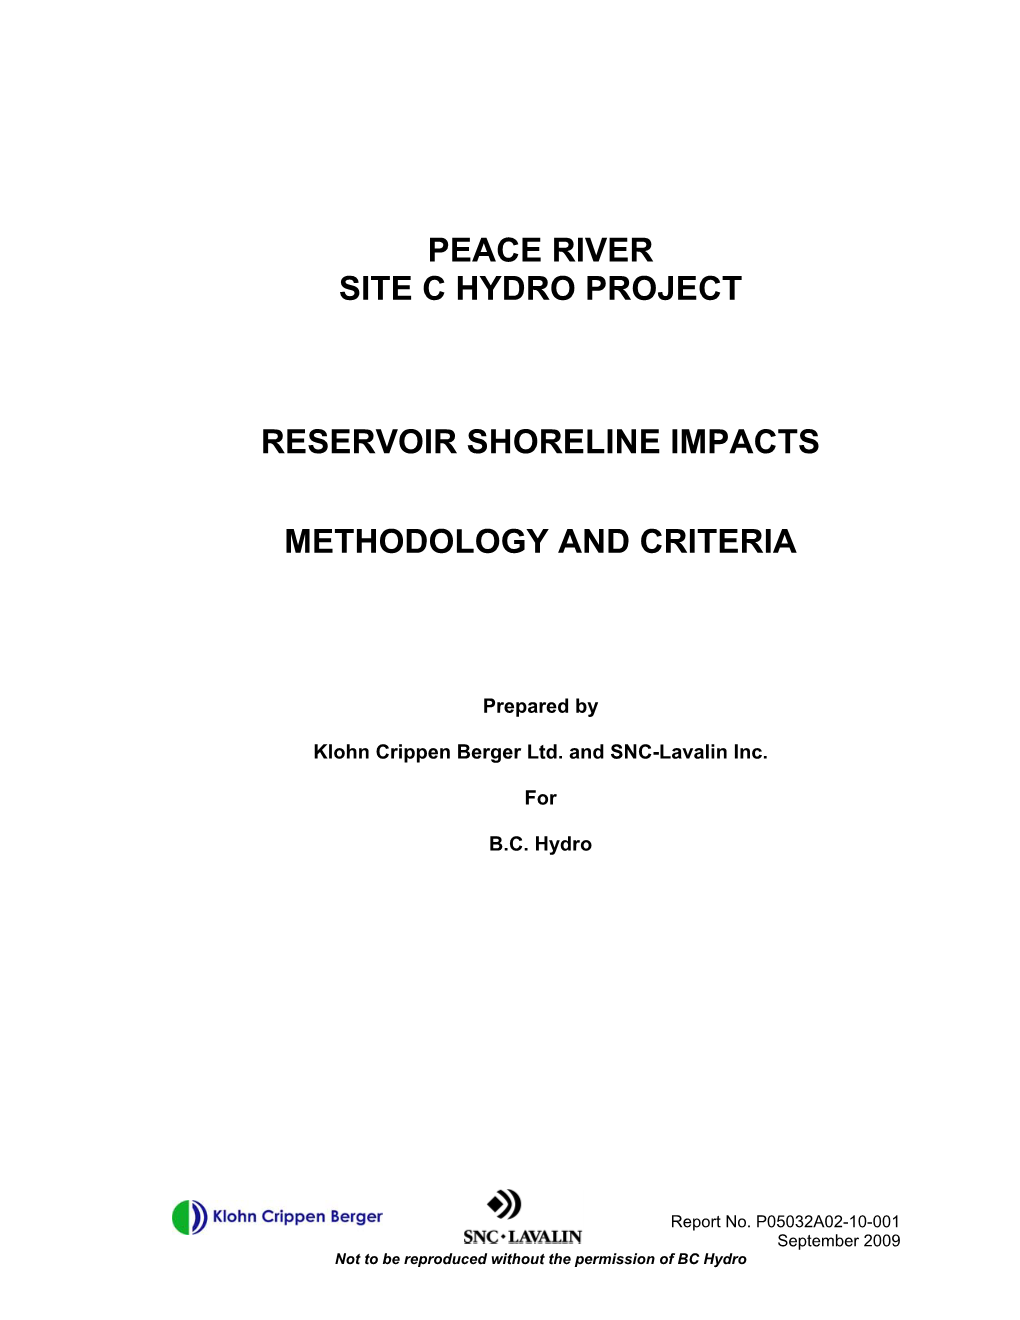 Peace River Site C Hydro Project Reservoir